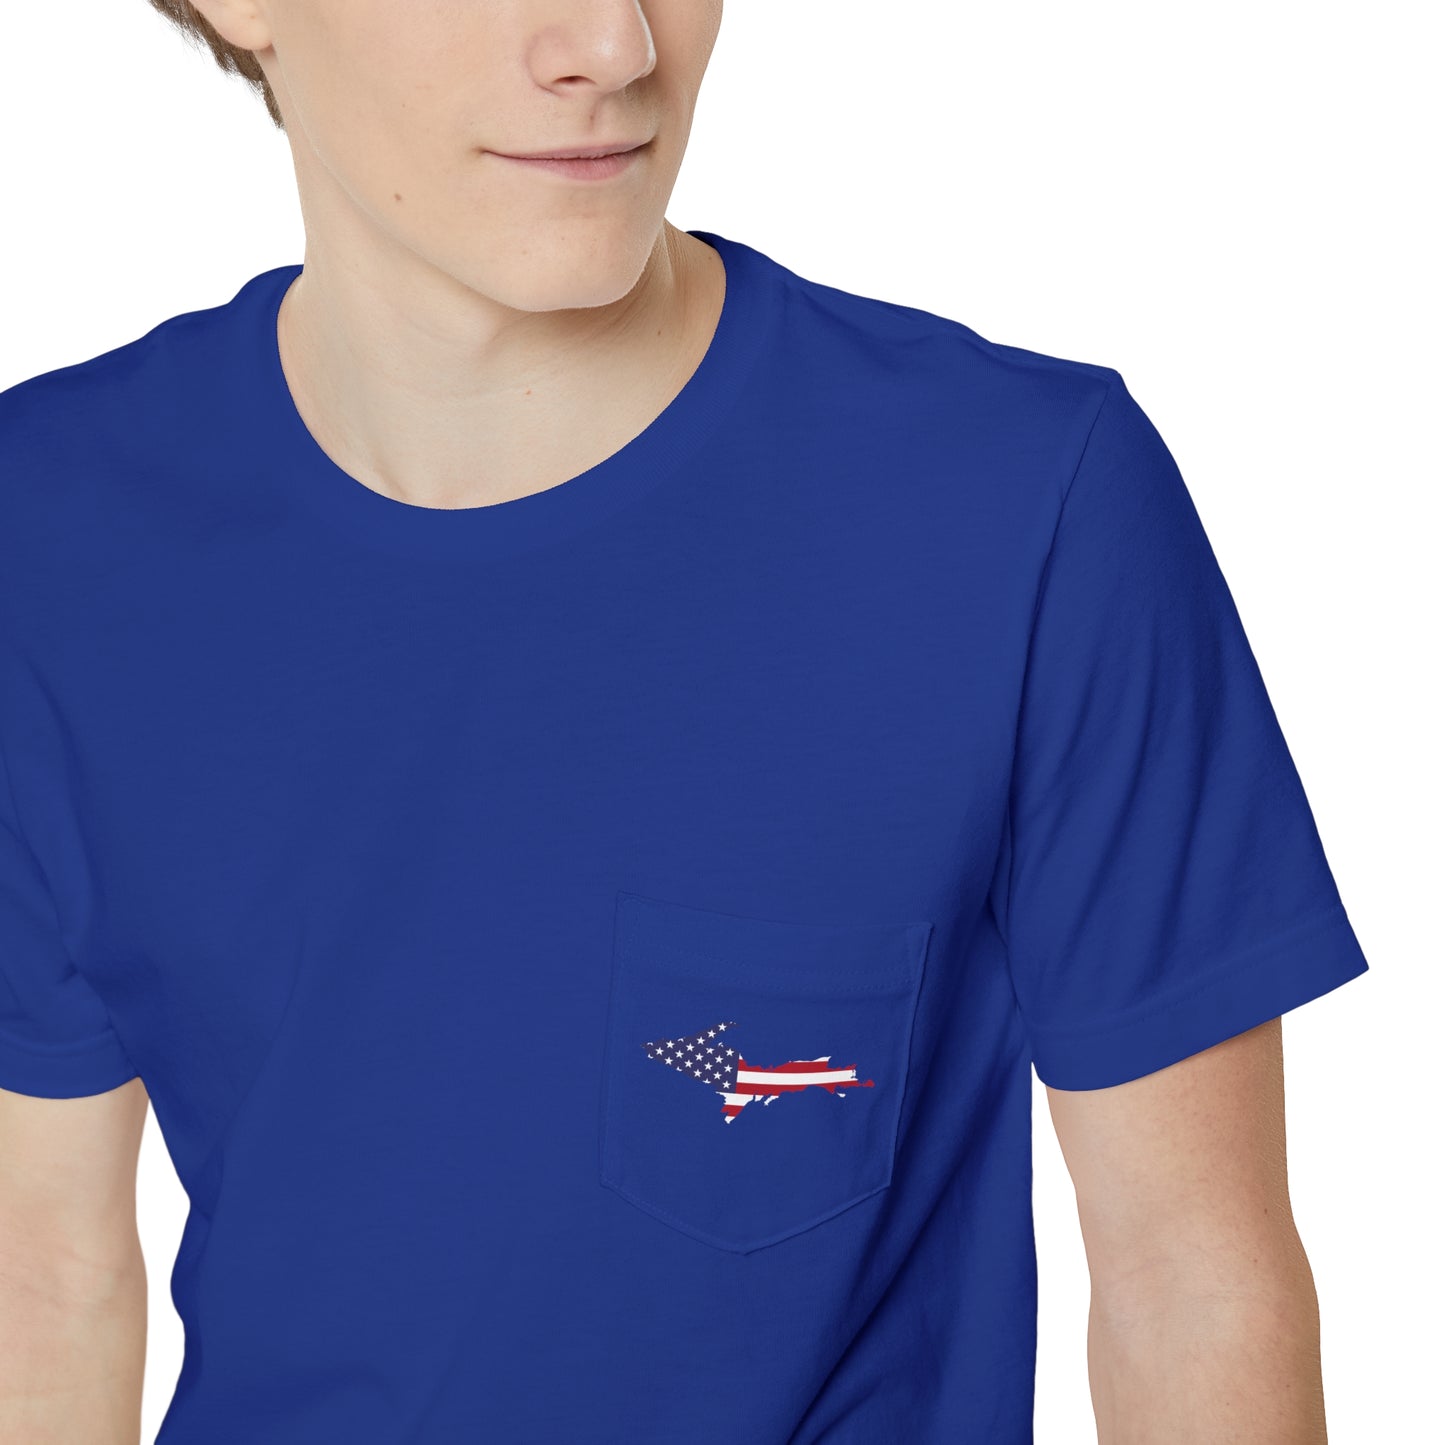 Michigan Upper Peninsula Pocket T-Shirt (w/ UP USA Flag) | Unisex Standard